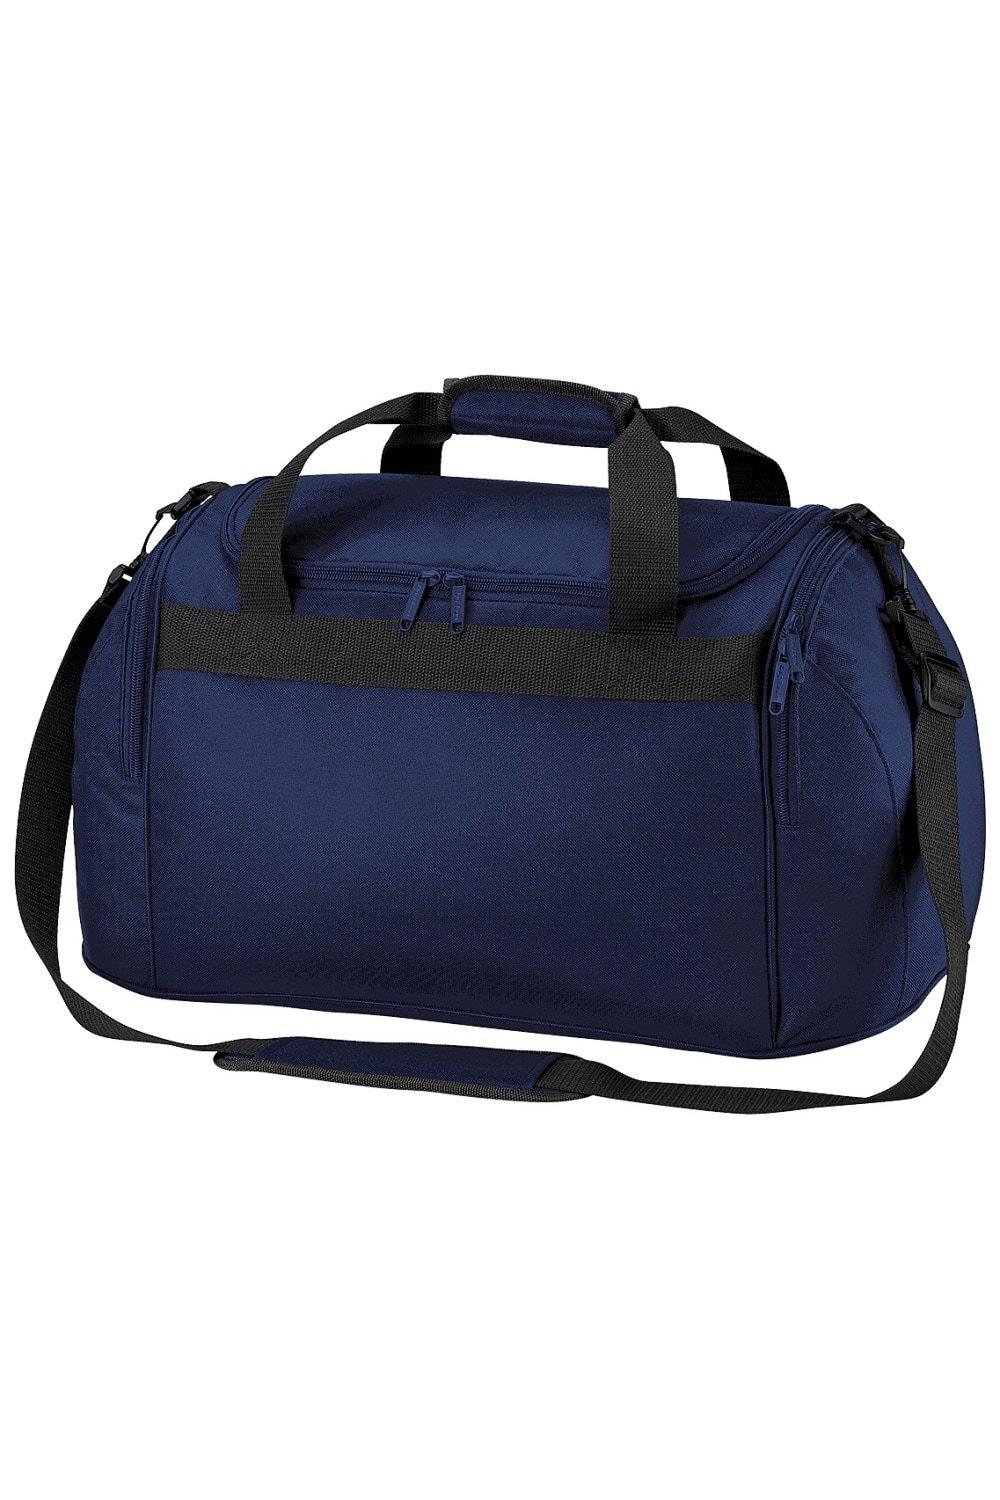 Дорожная сумка для фристайла/спортивная сумка (26 литров) (2 шт. в упаковке) Bagbase, темно-синий цена и фото